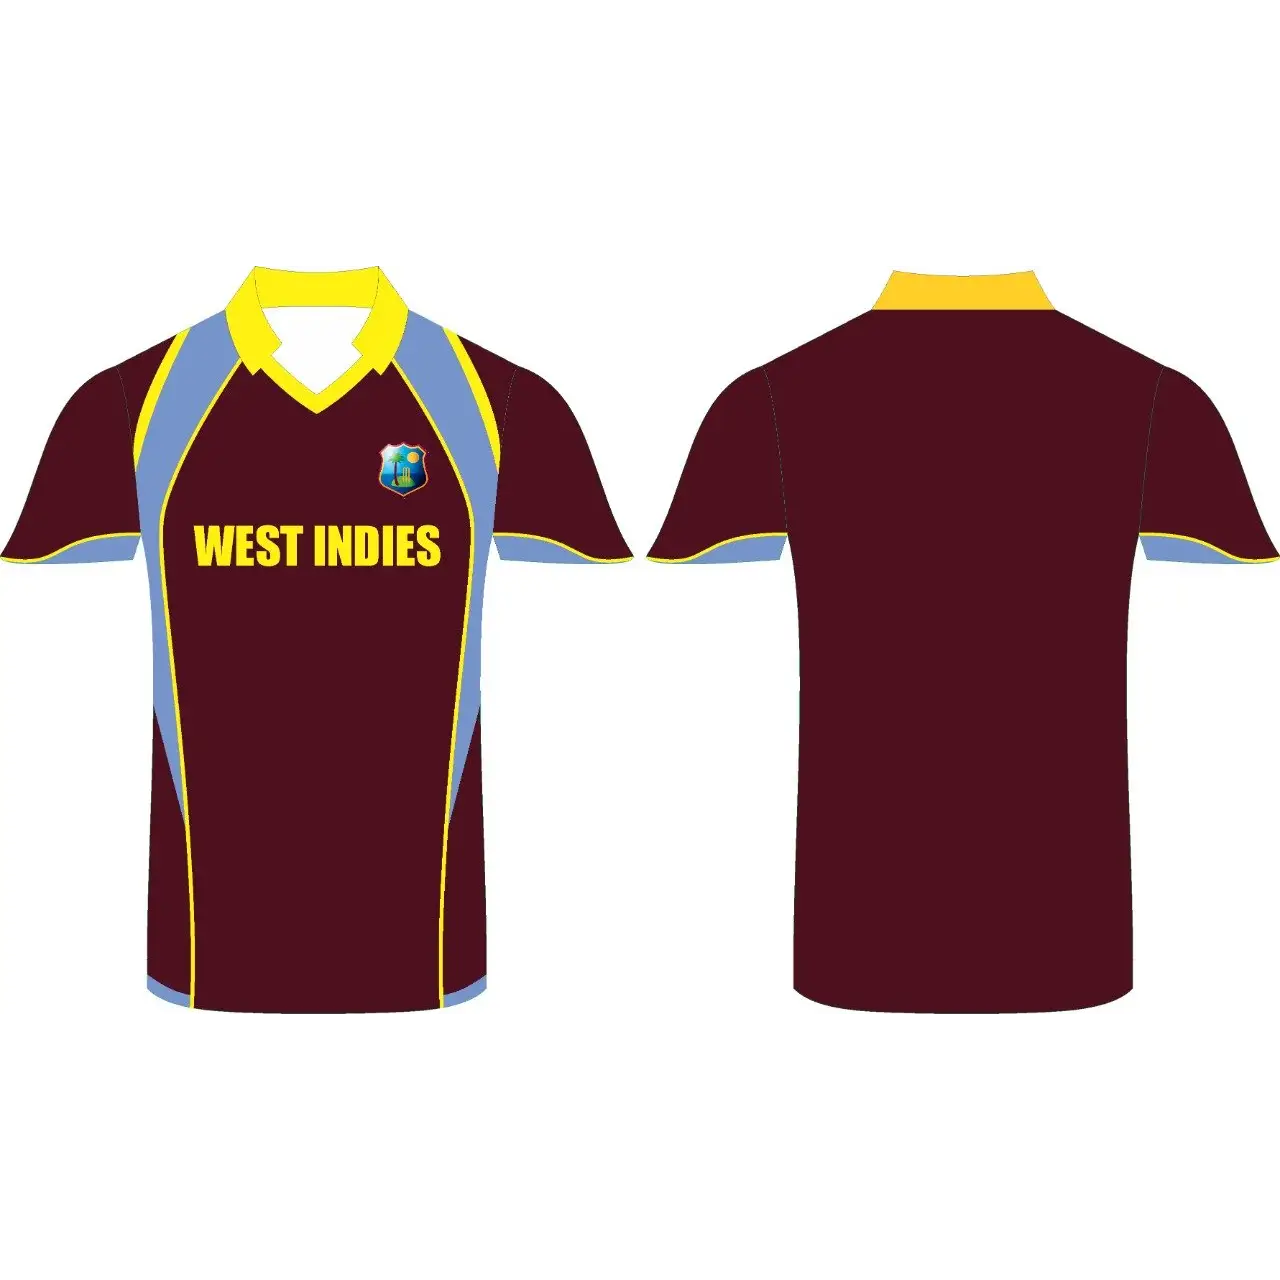 West Indies Cricket Team One Day International Shirt Maroon - CLOTHING - SHIRT